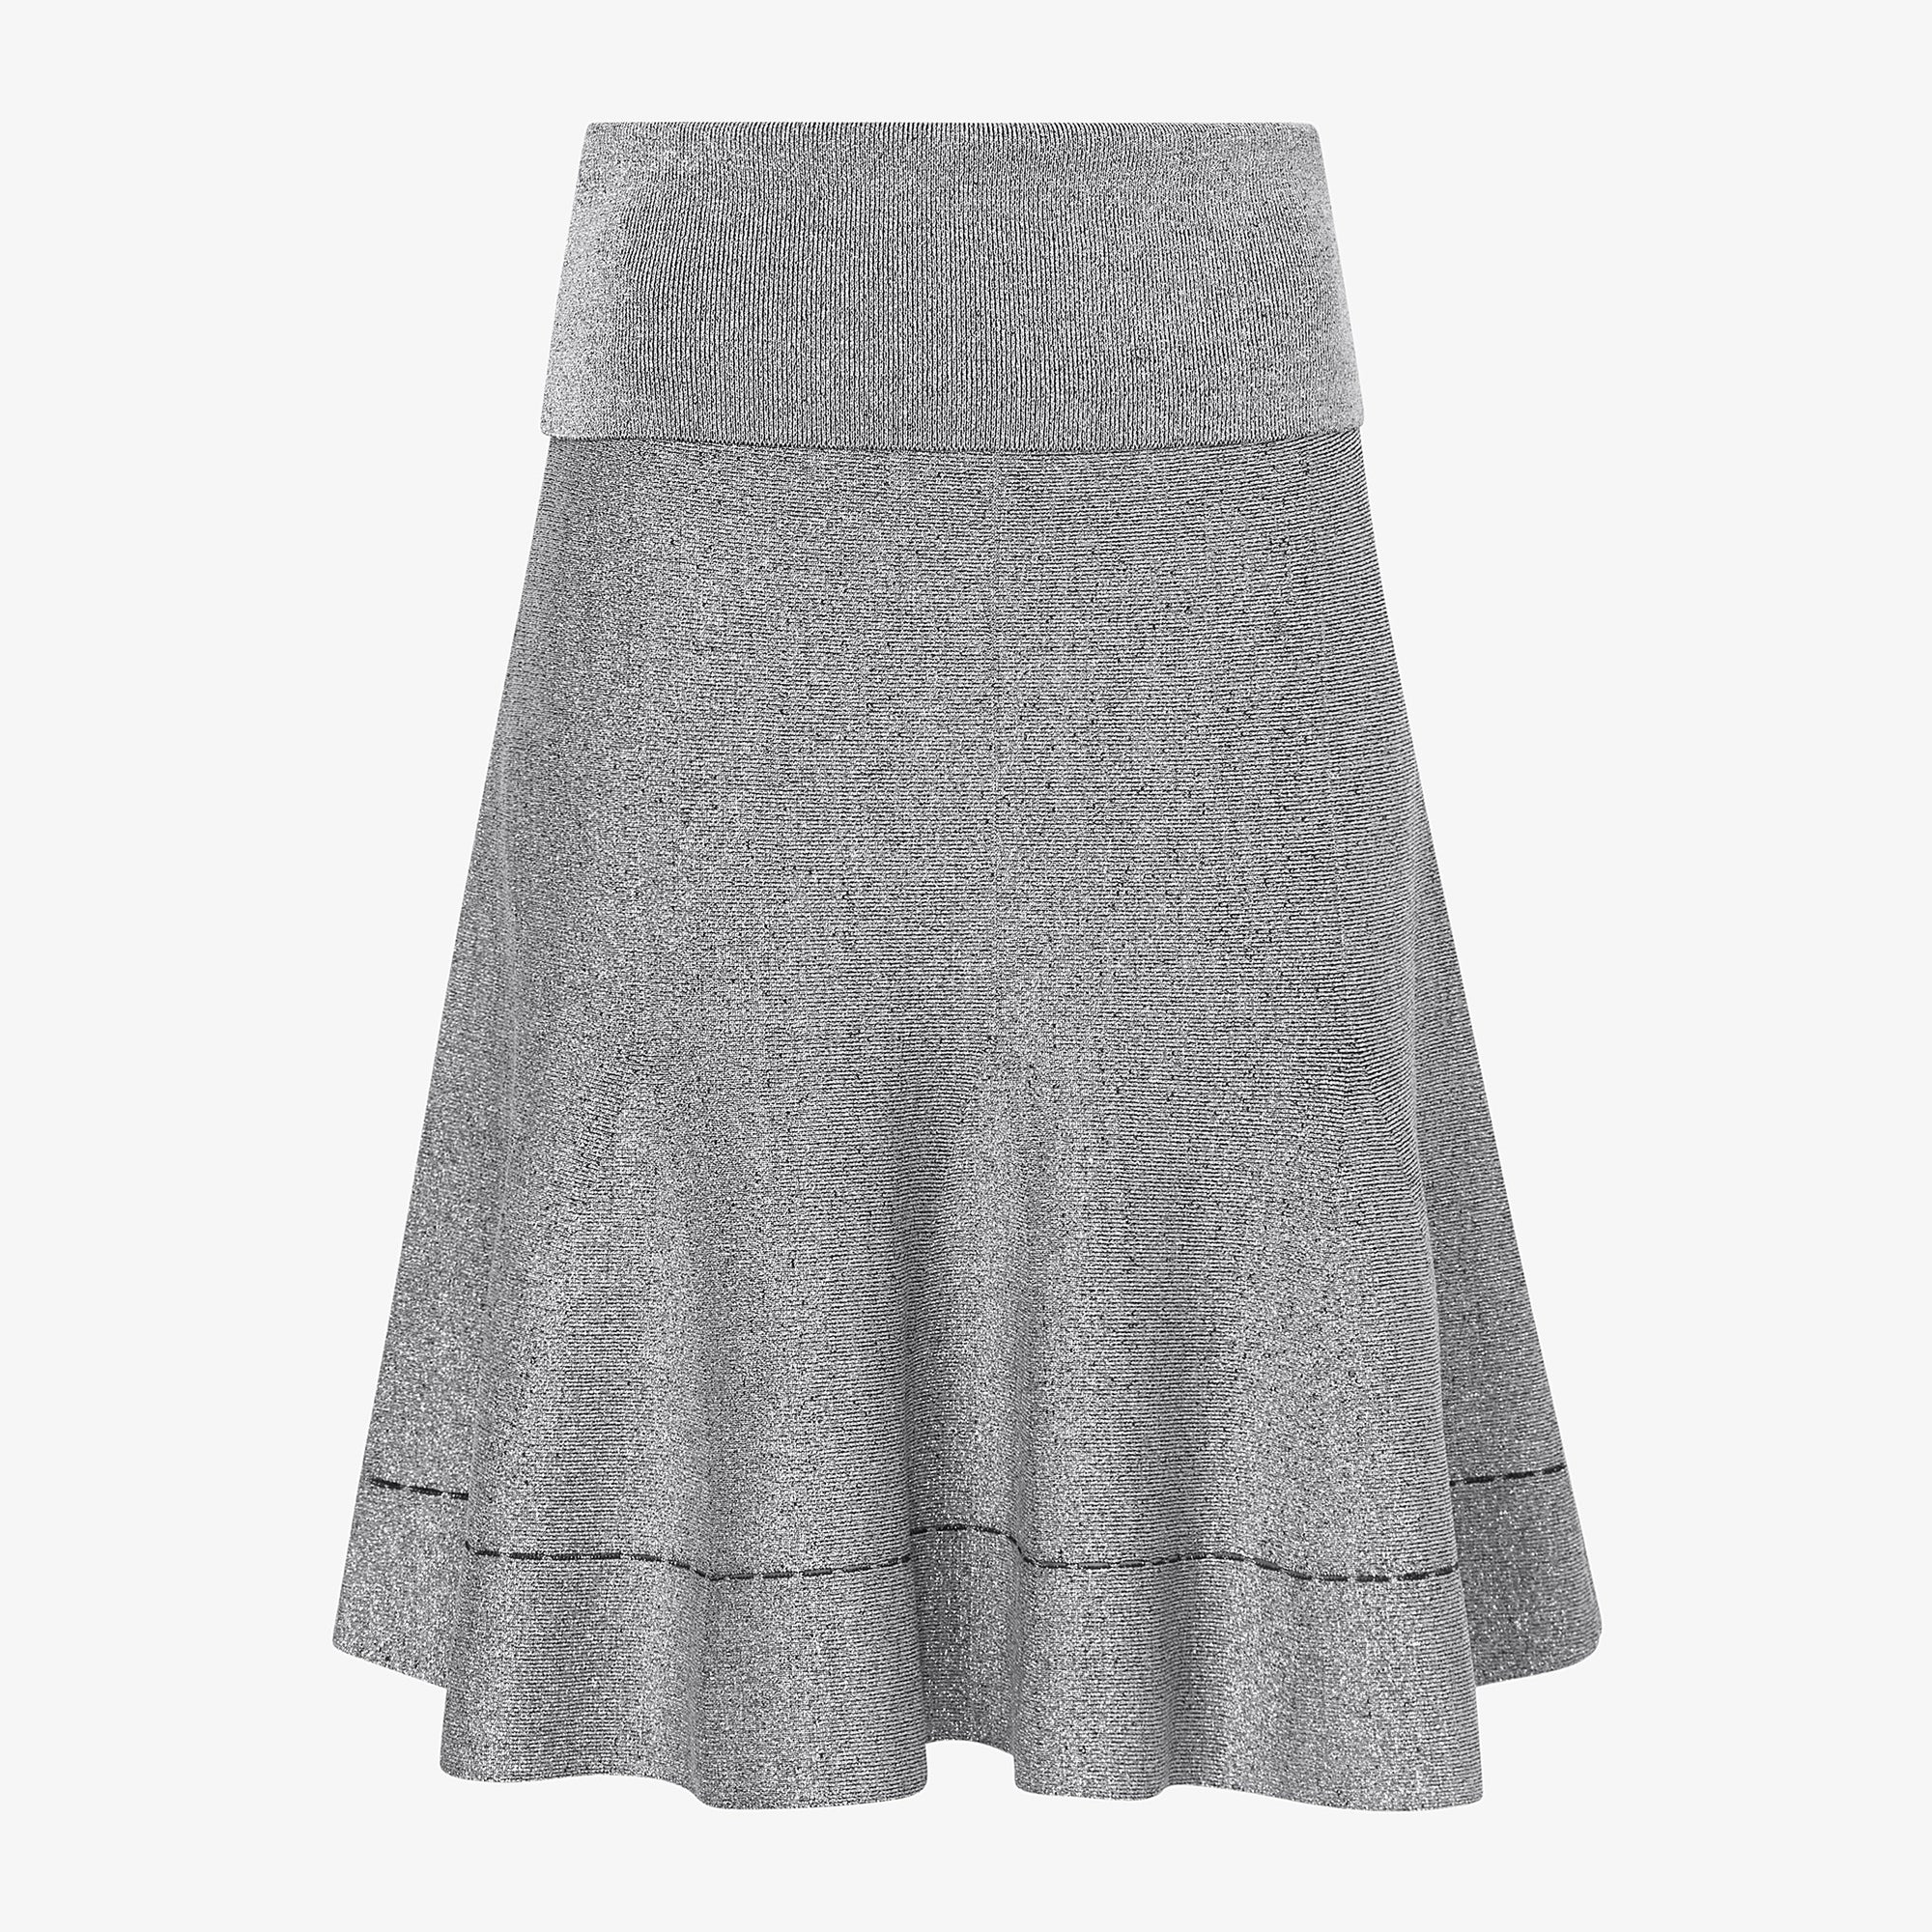 Packshot image of the luca skirt in black / silver sparkle